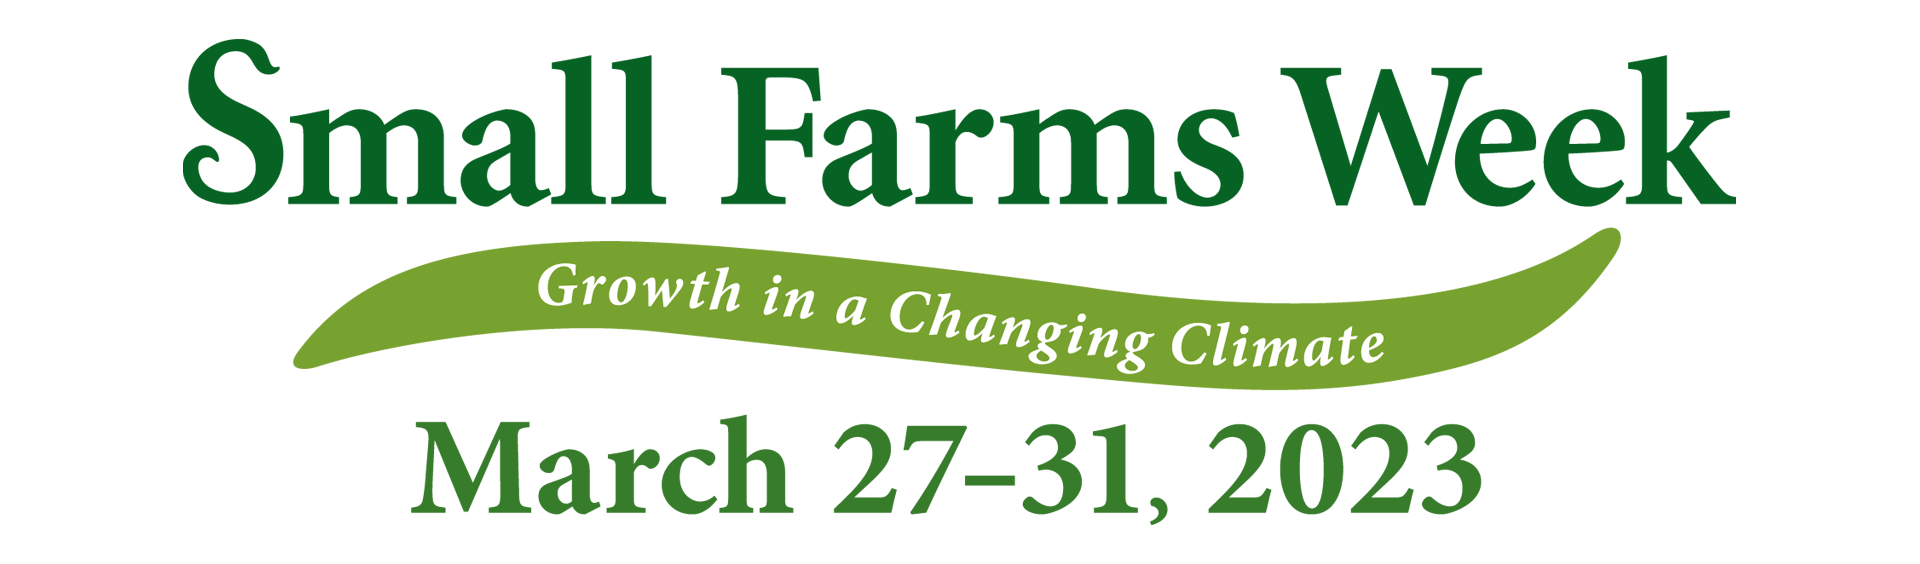 Small Farms Week Logo